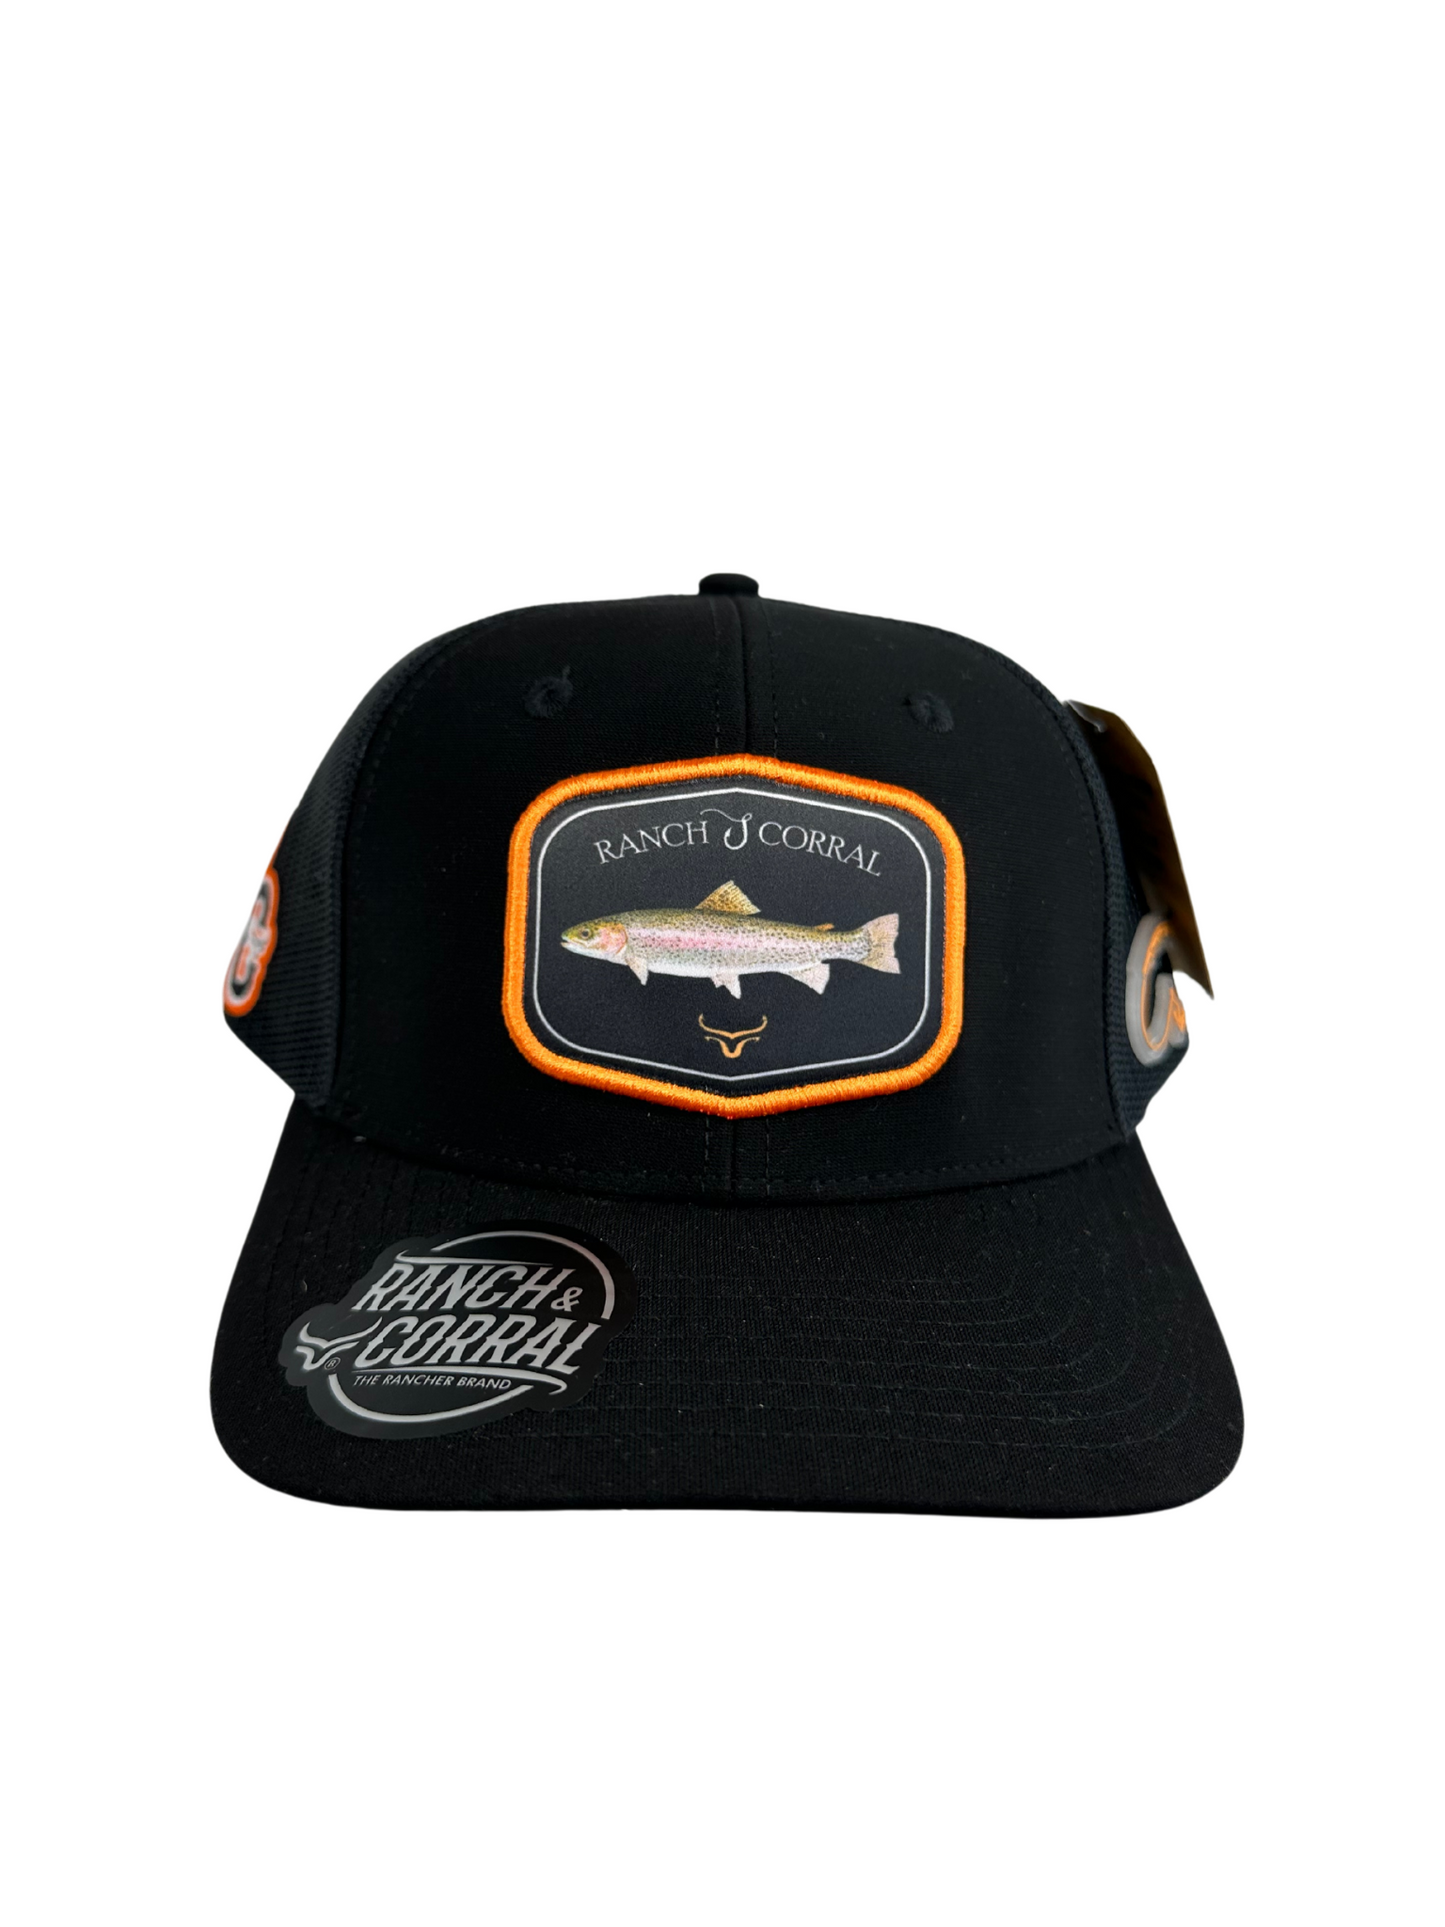 Ranch & Corral Fish Cap - Black